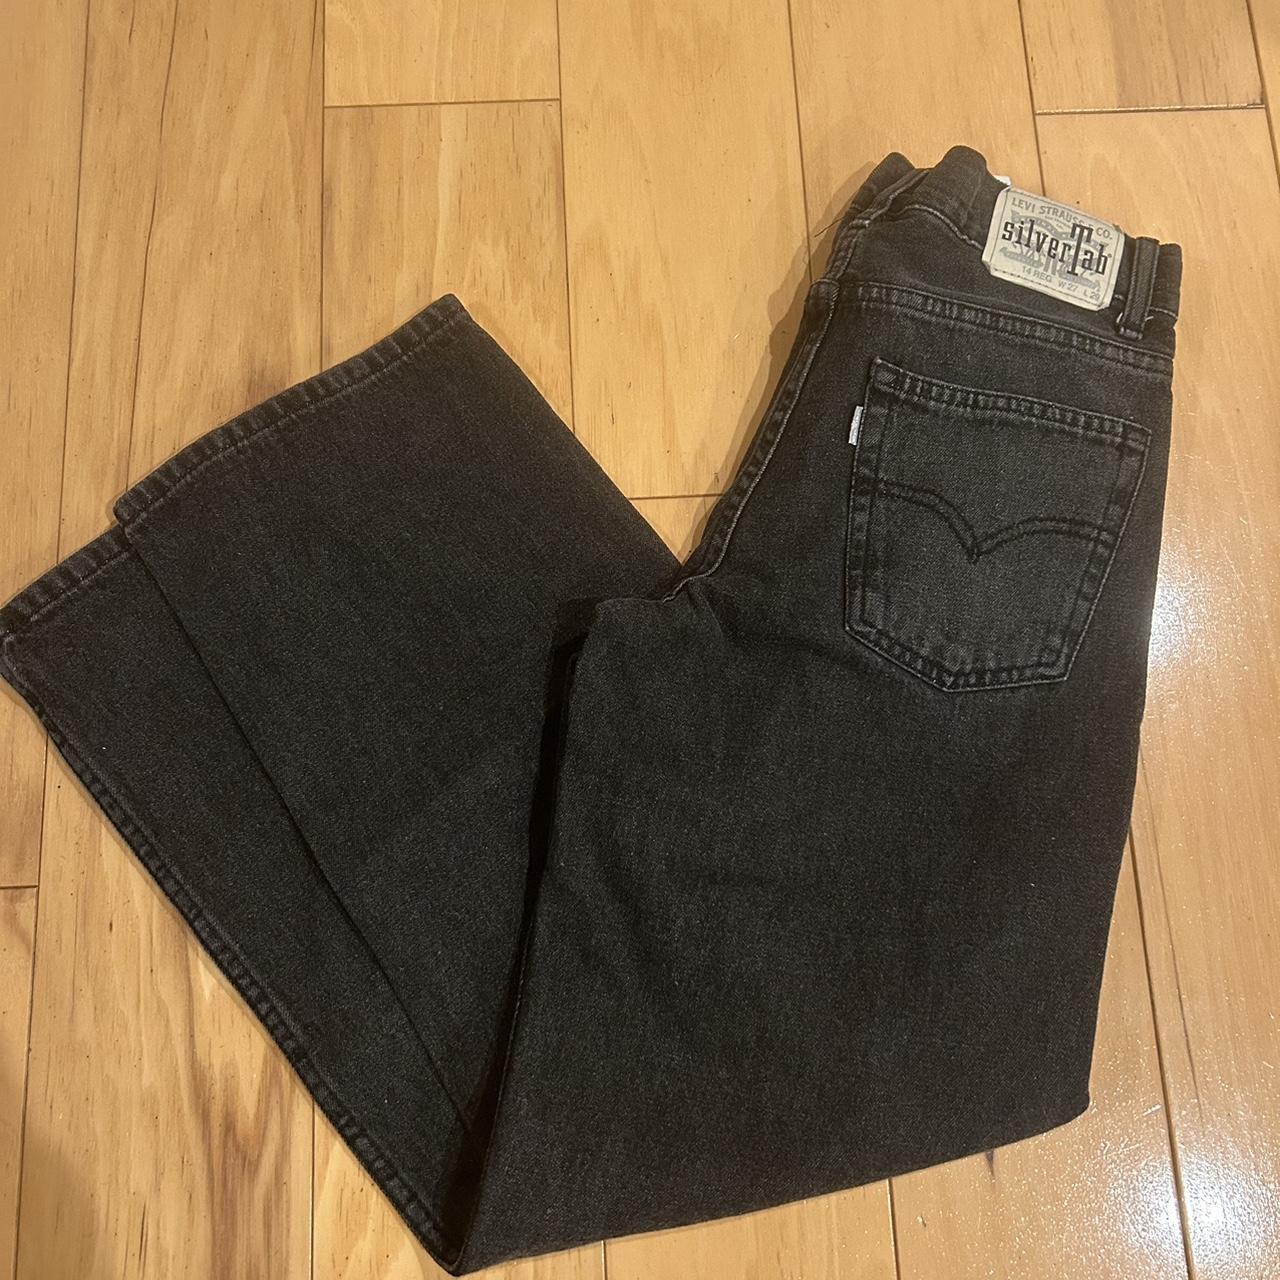 Vintage Levi Silvertab Jeans Tagged 27W 29L 8 inch... - Depop